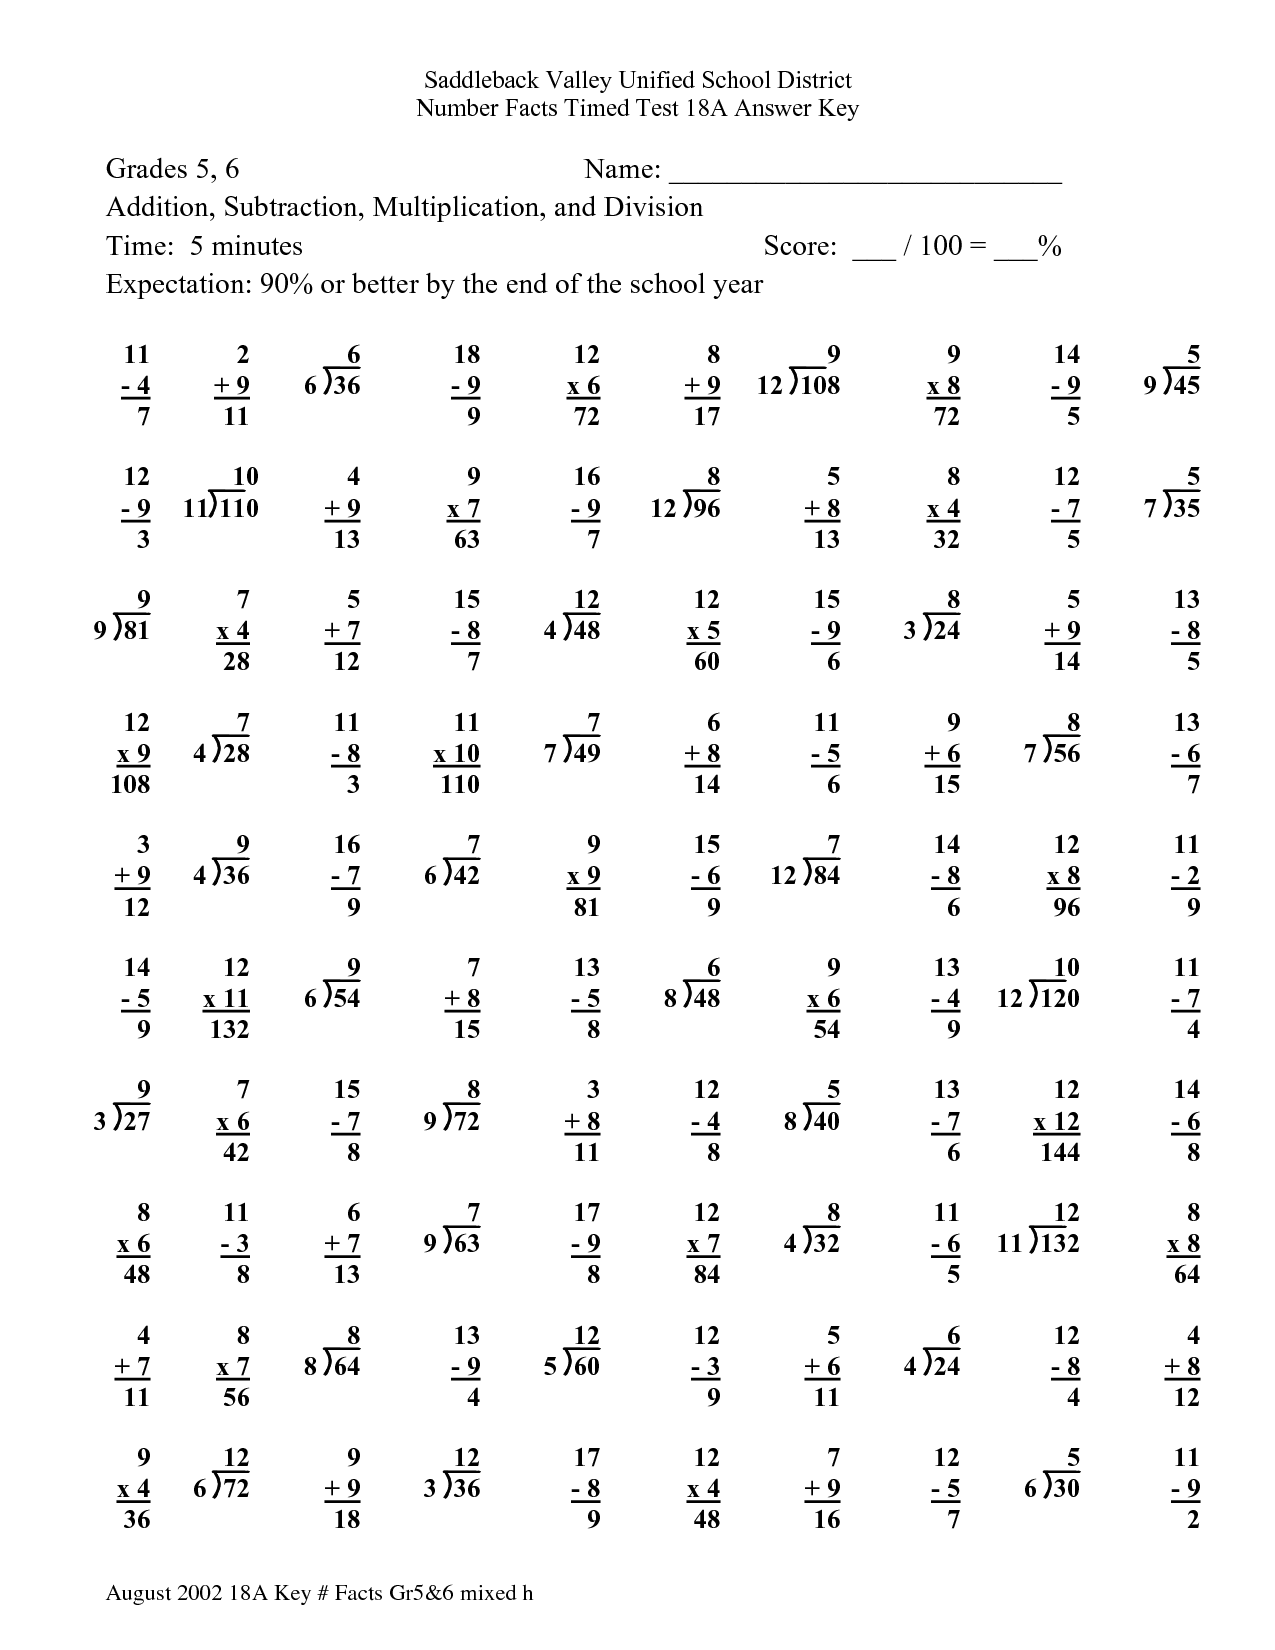 Algebra Multiplication And Division Worksheets